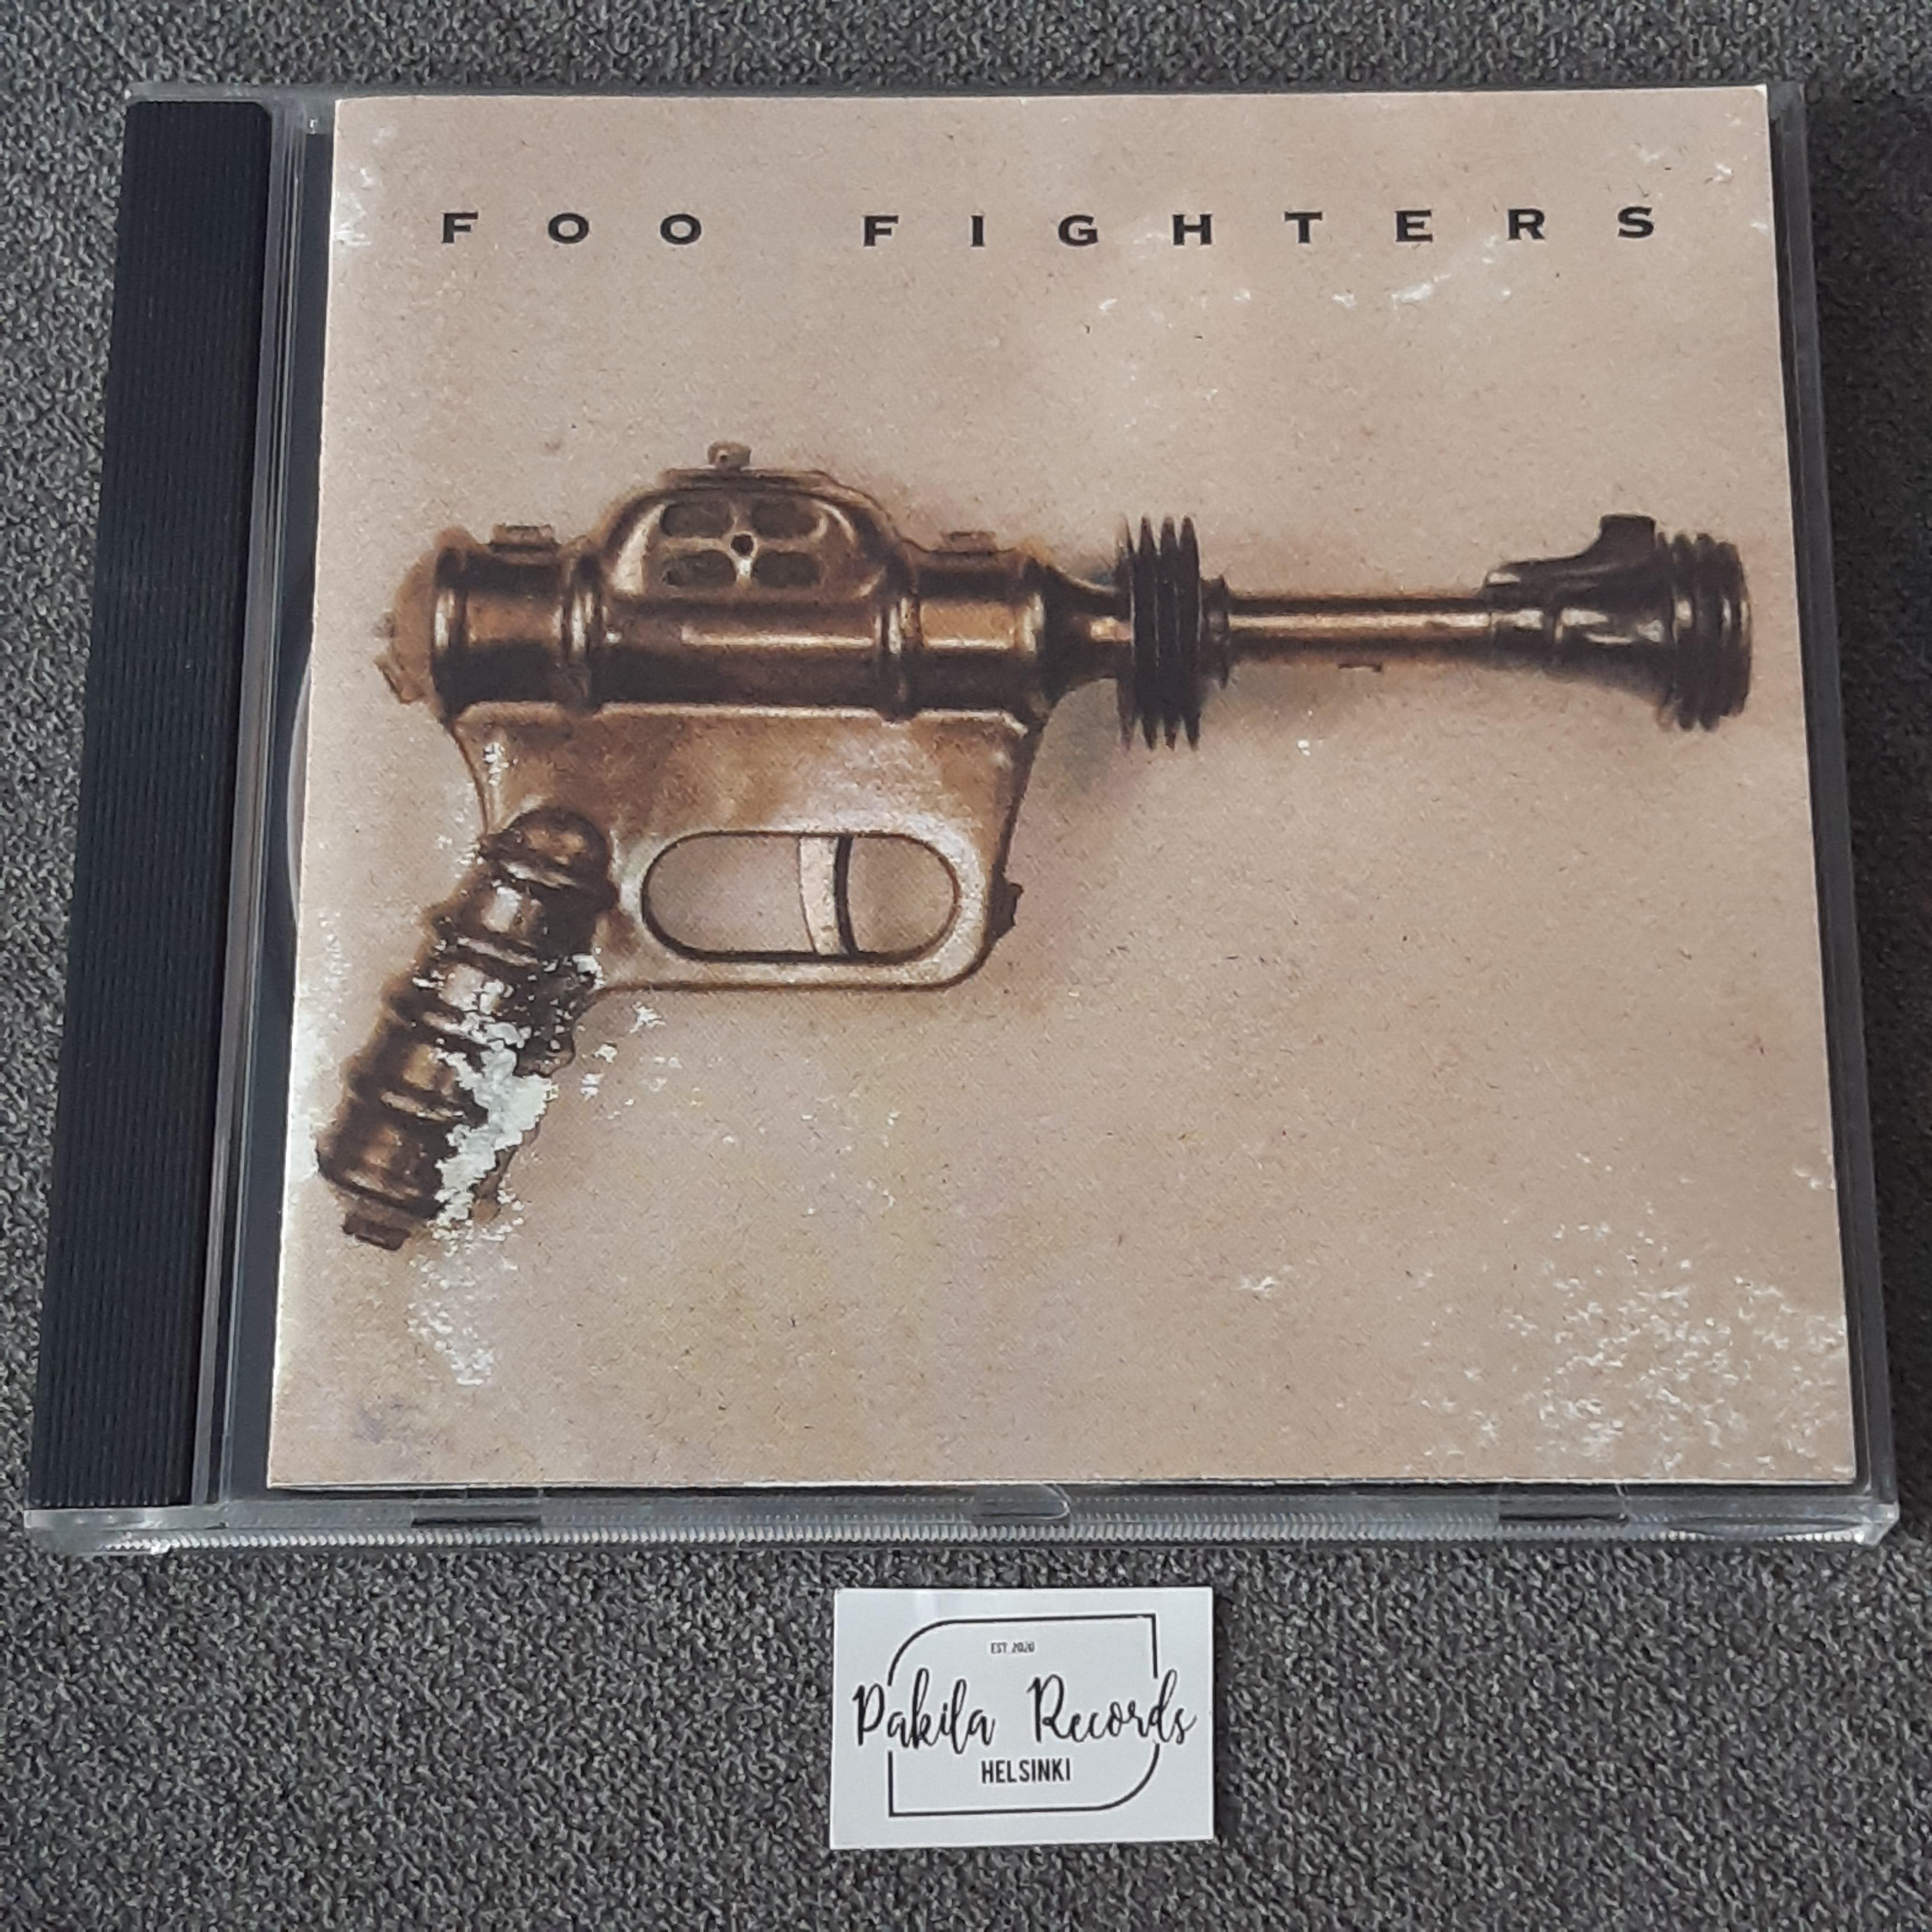 Foo Fighters - Foo Fighters - CD (käytetty)